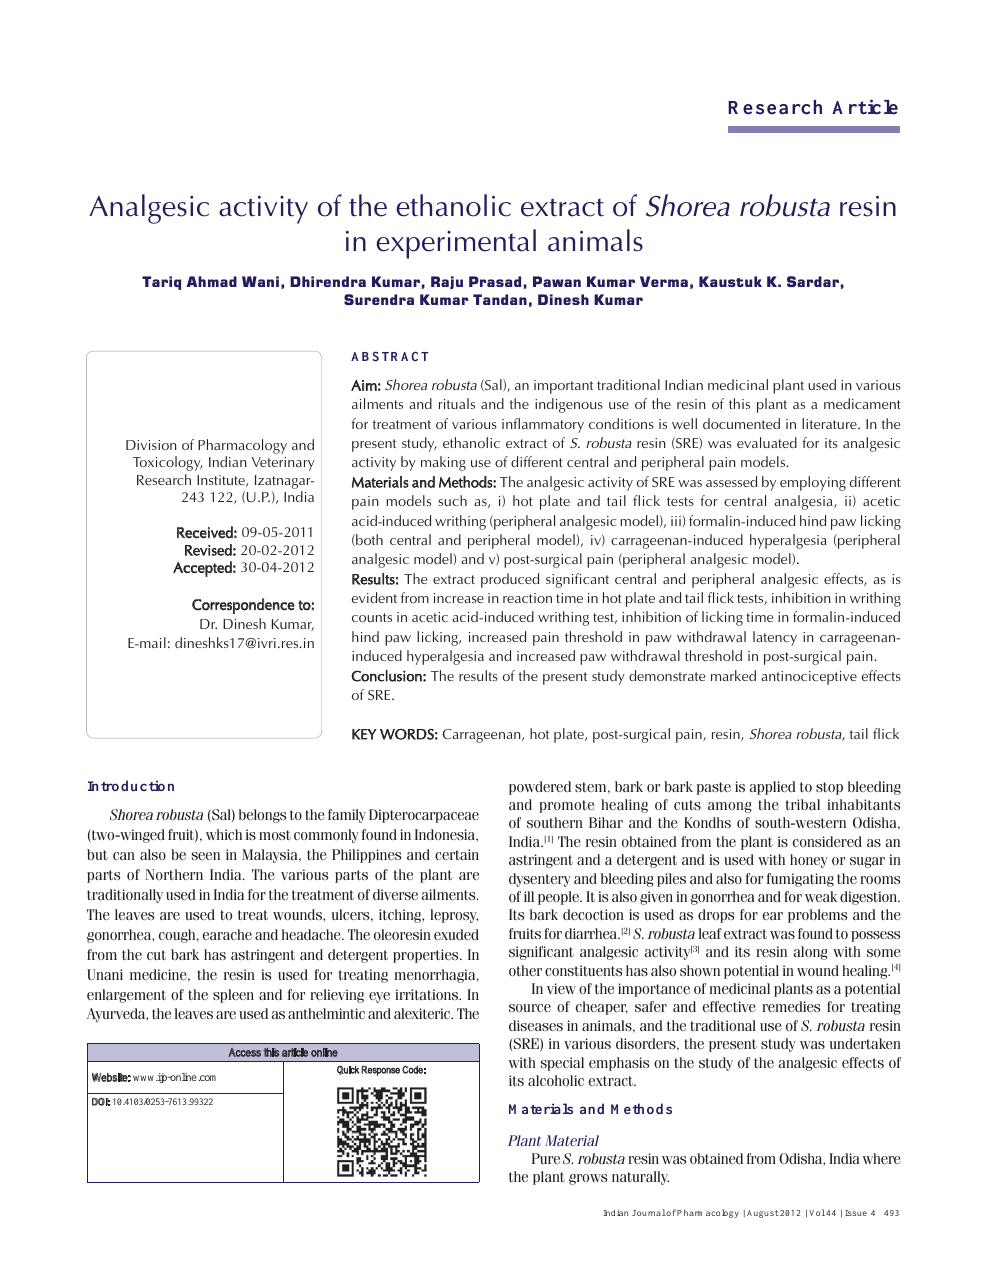 Analgesic Activity Of The Ethanolic Extract Of Shorea Robusta